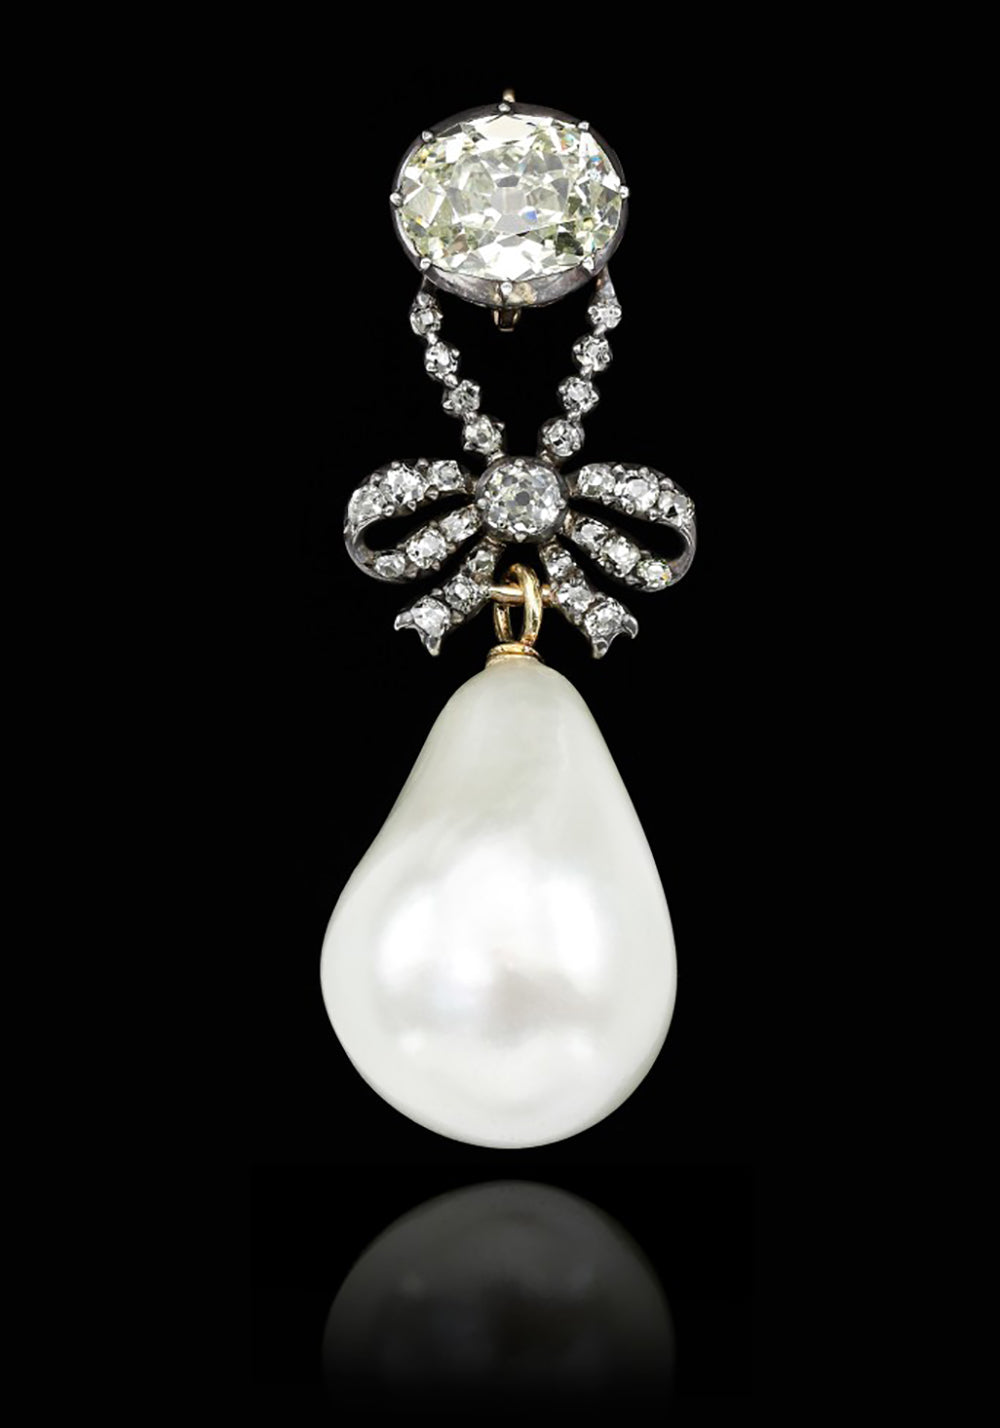 Marie Antoinette's Natural Pearl Pendant